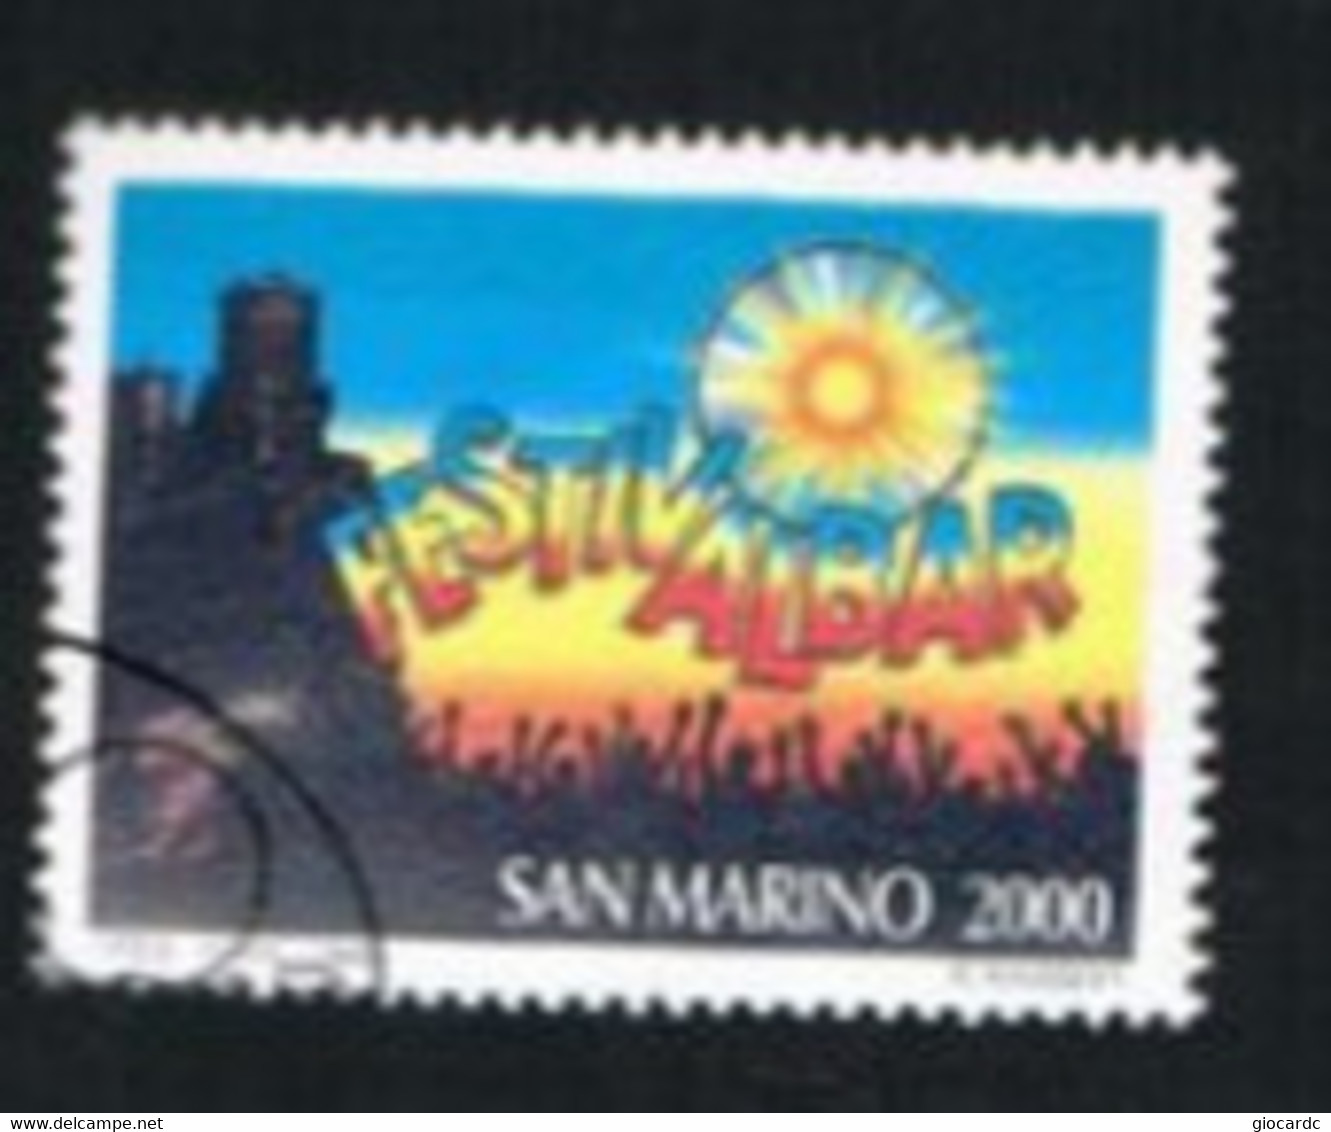 SAN MARINO - UN  1517  - 1996  MUSICA: FESTIVALBAR  -  USED° - Gebraucht